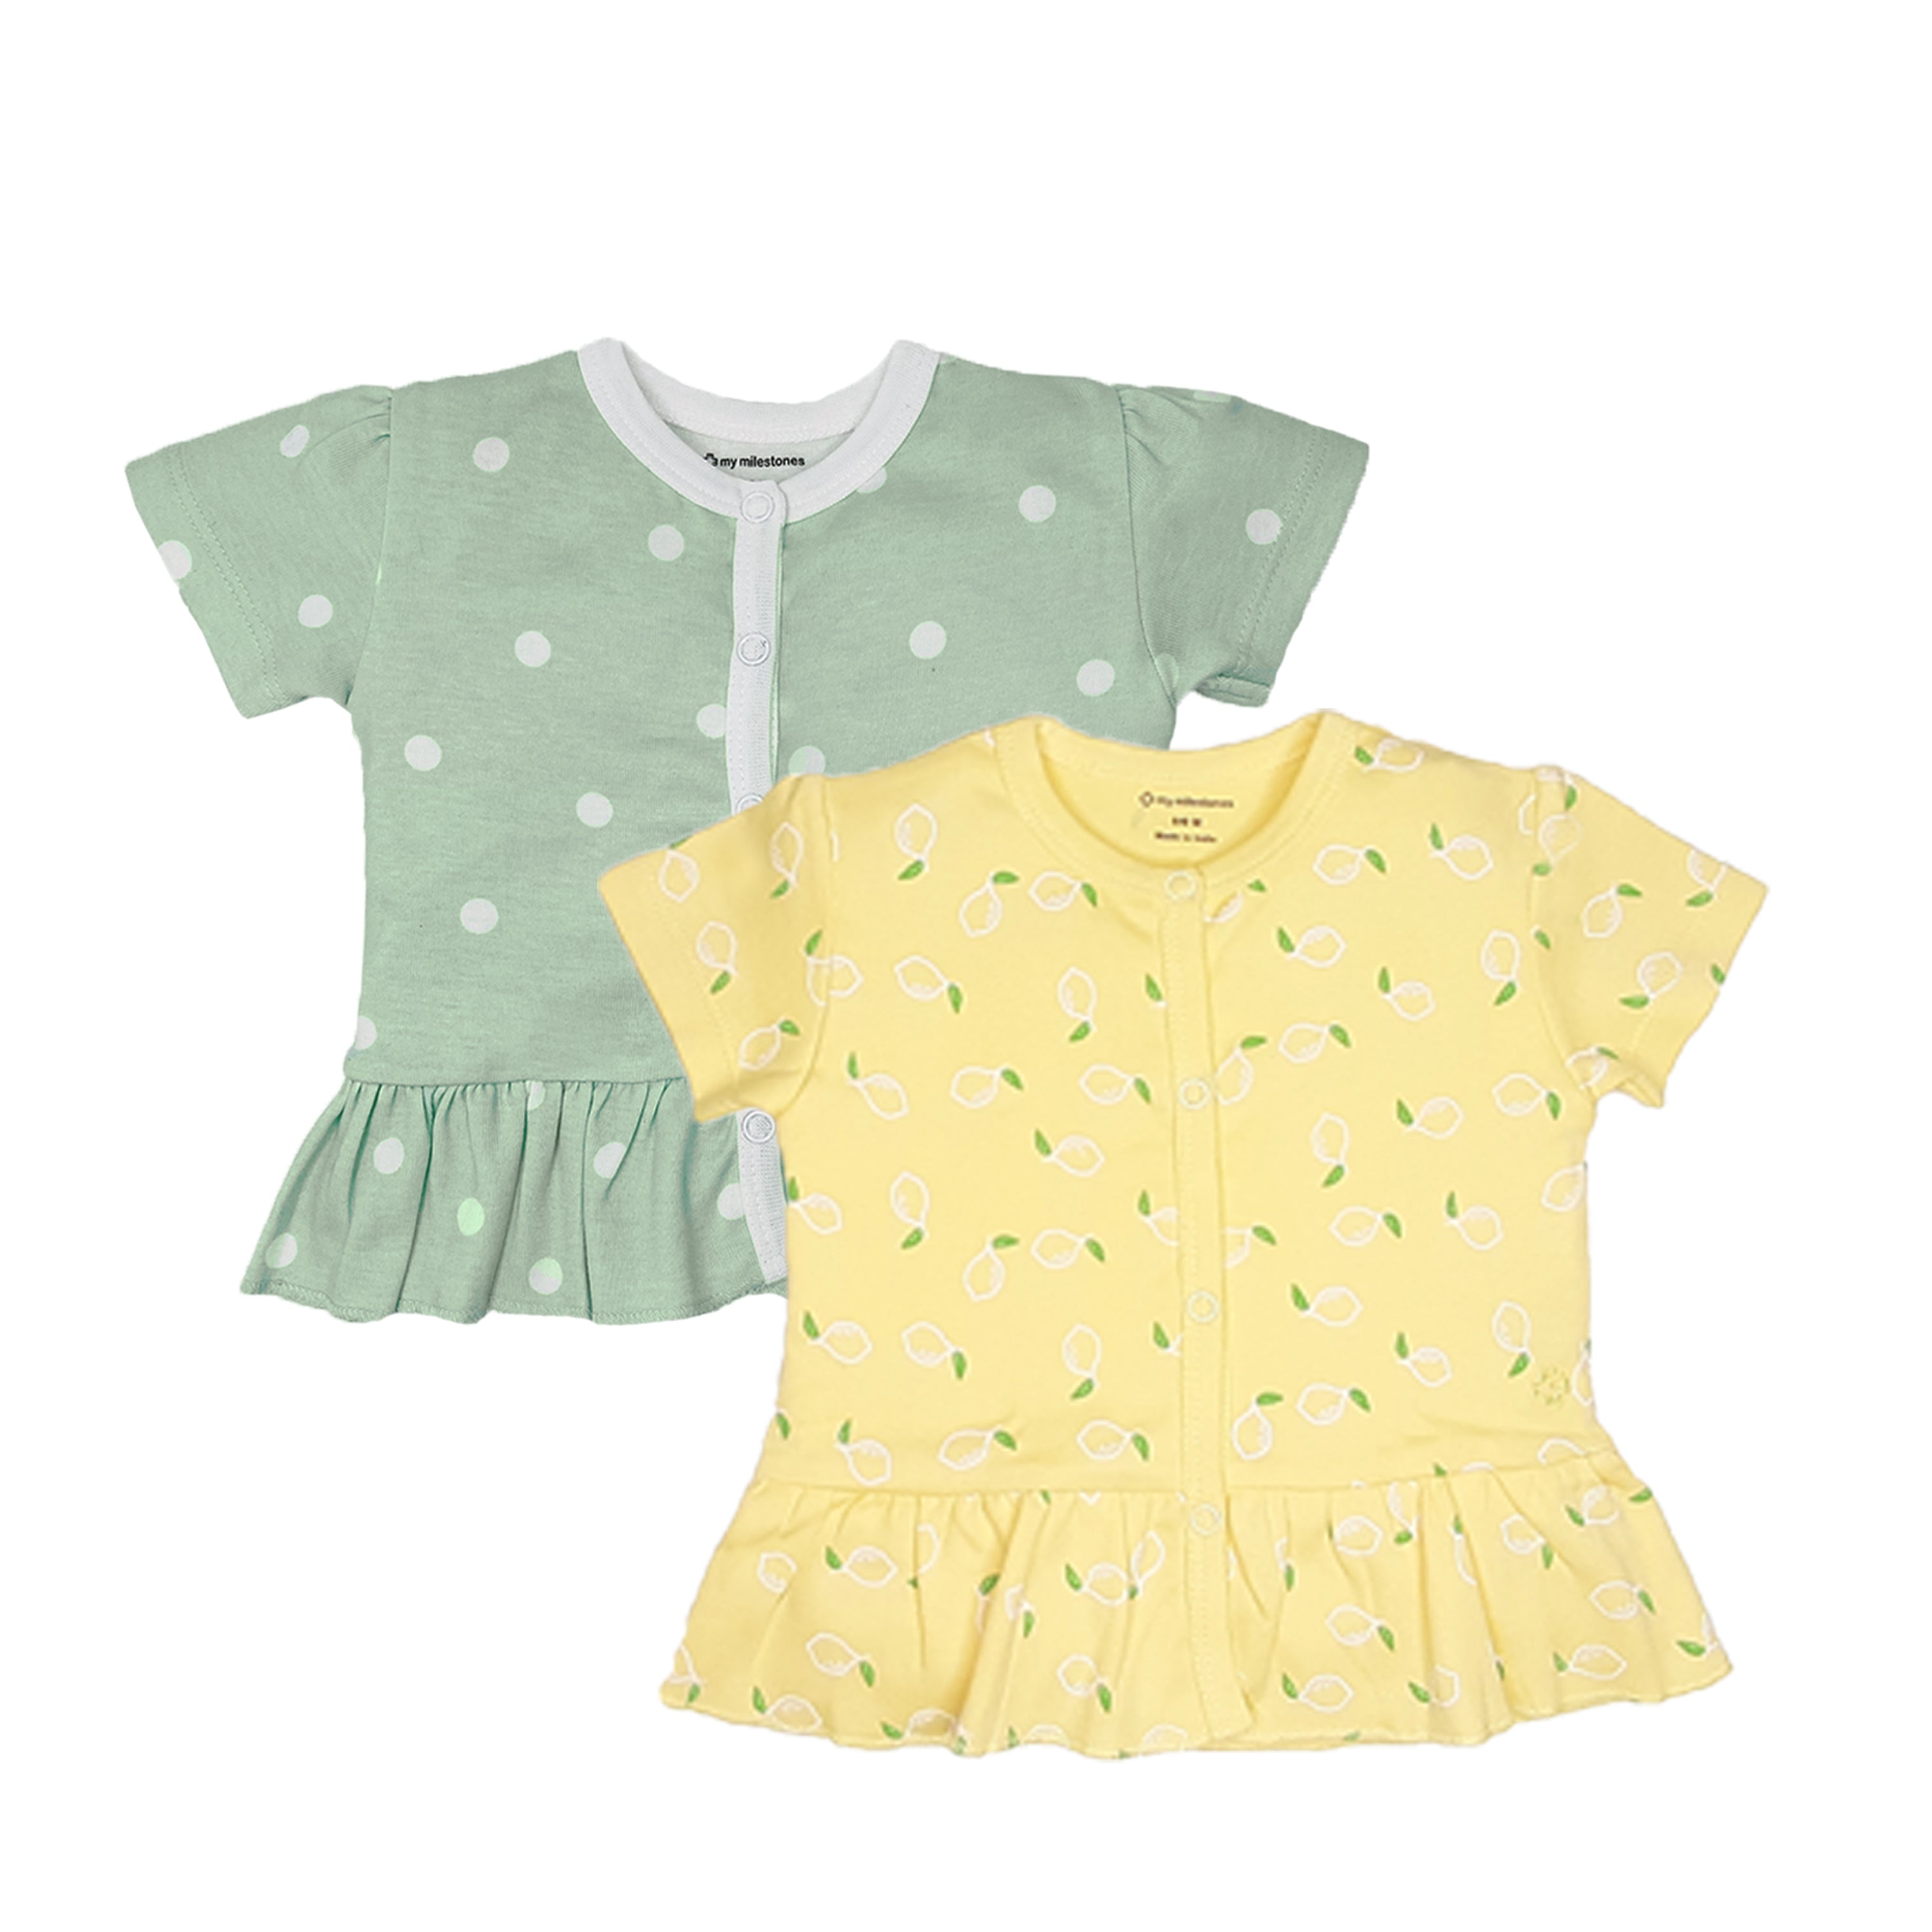 My Milestones T-shirt Half Sleeves Girls Sage Green Polka/ Yellow Lemon - 2 Pc Pack